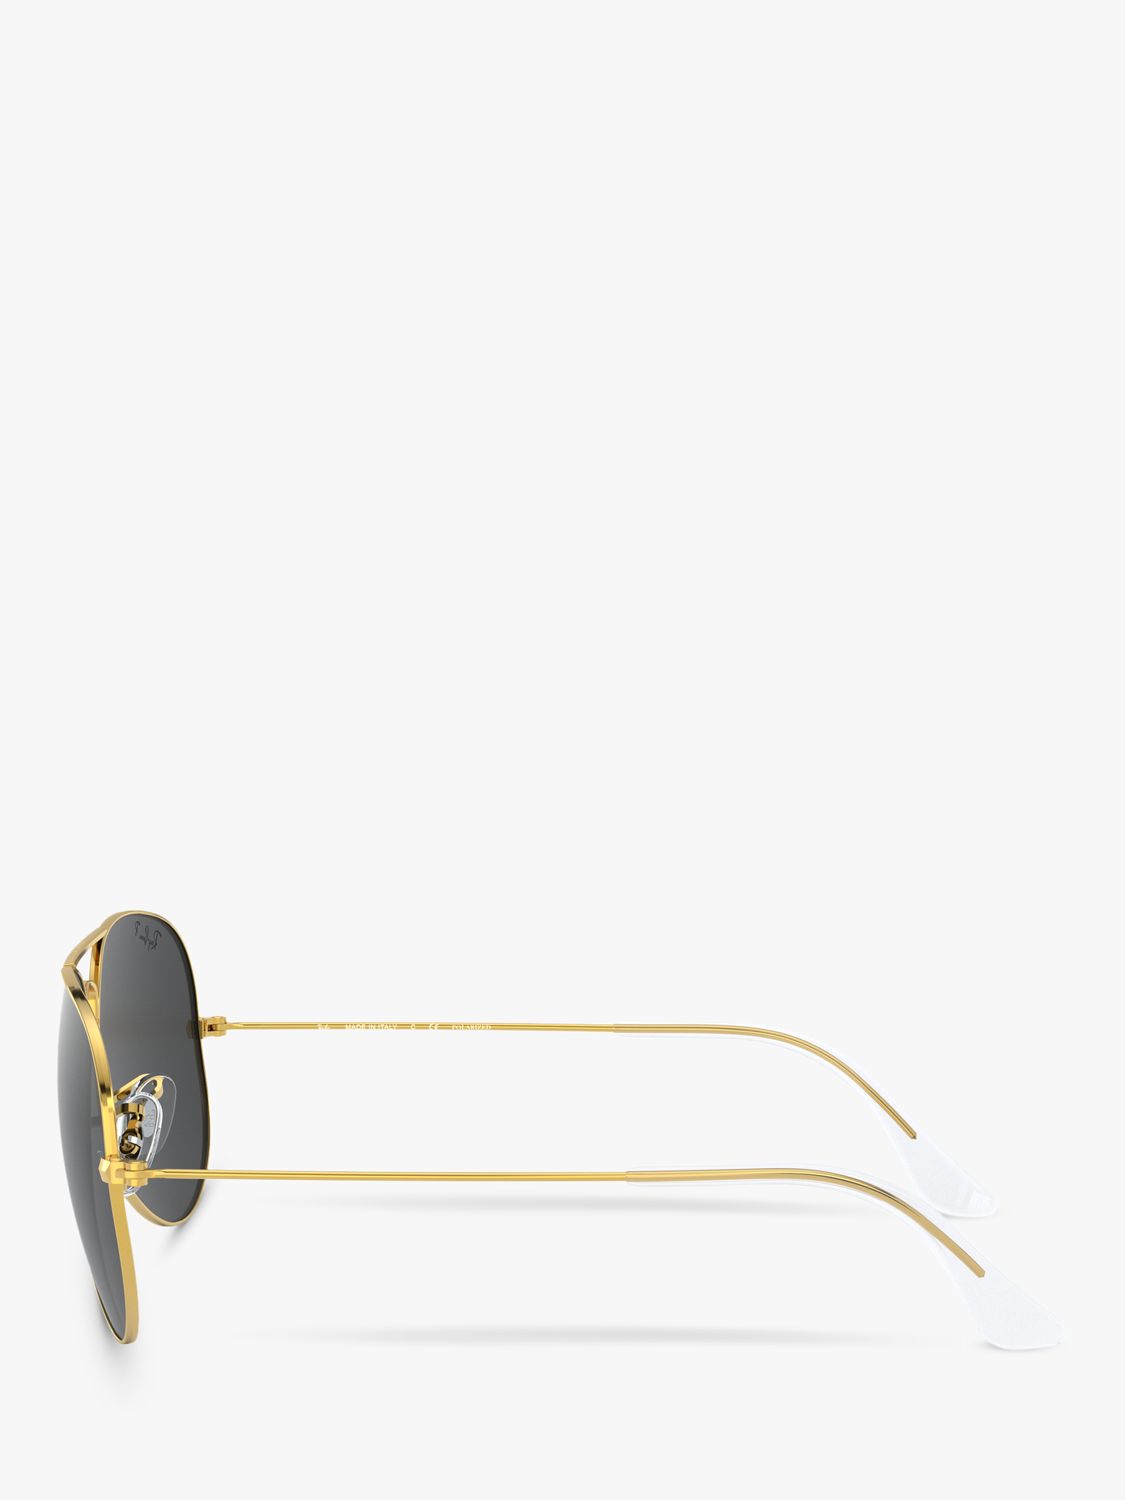 Ray-Ban RB3025 Unisex Polarised Aviator Sunglasses, Gold/Black